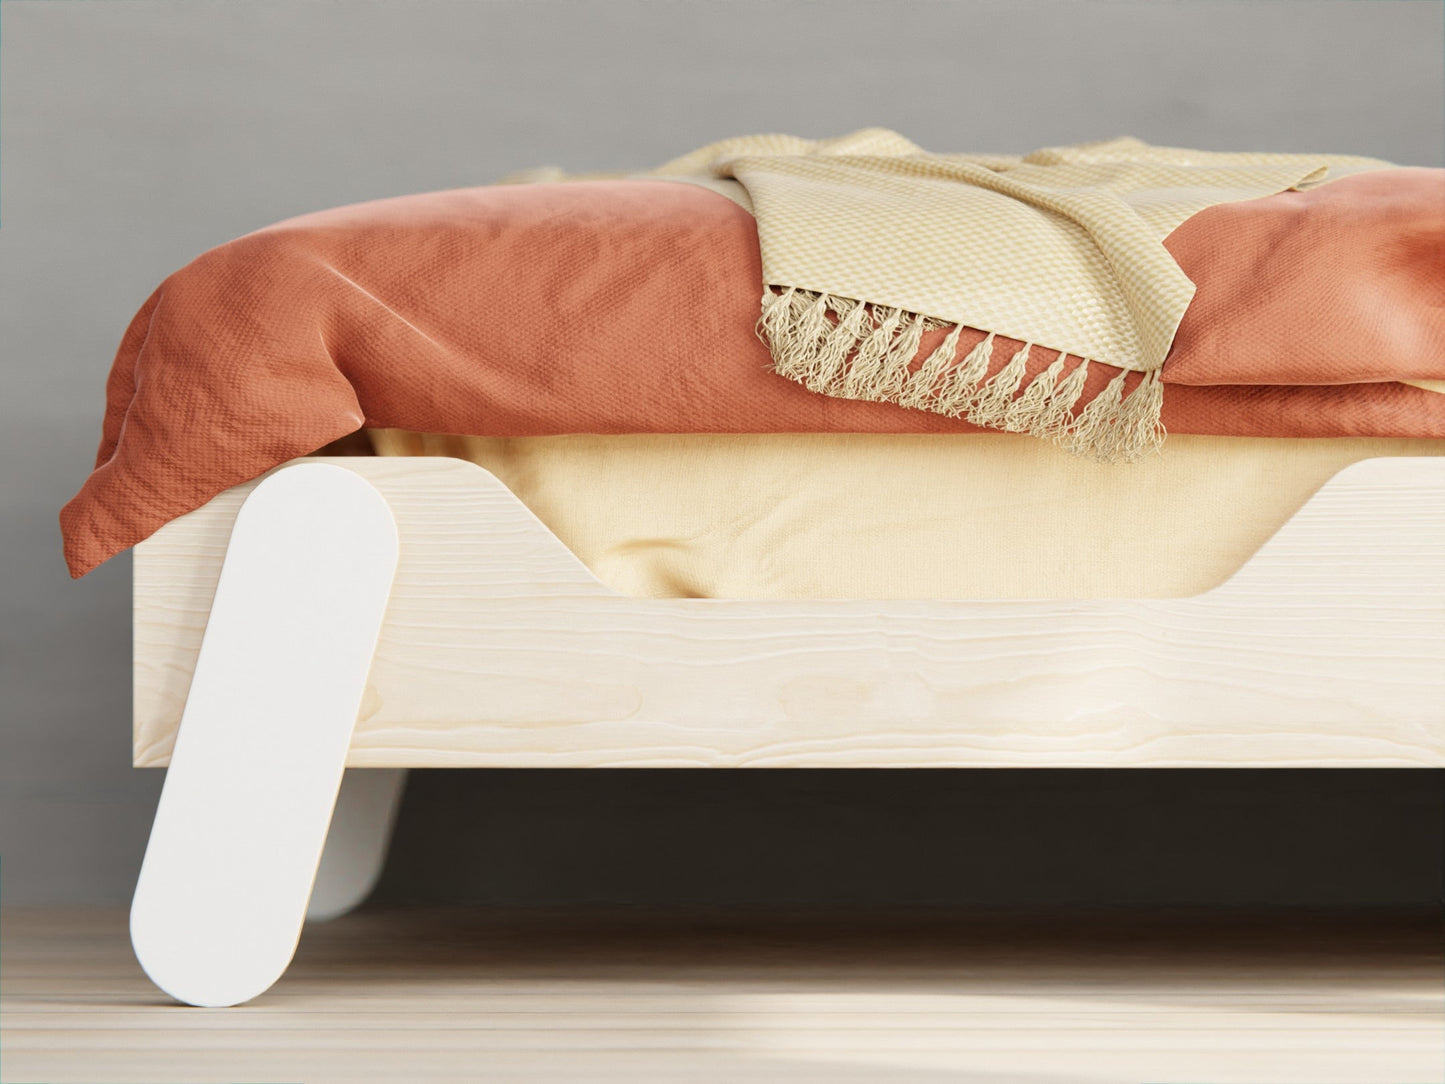 Wooden kids bed frame with slats and legs for floor bed - KitSmart Furniture